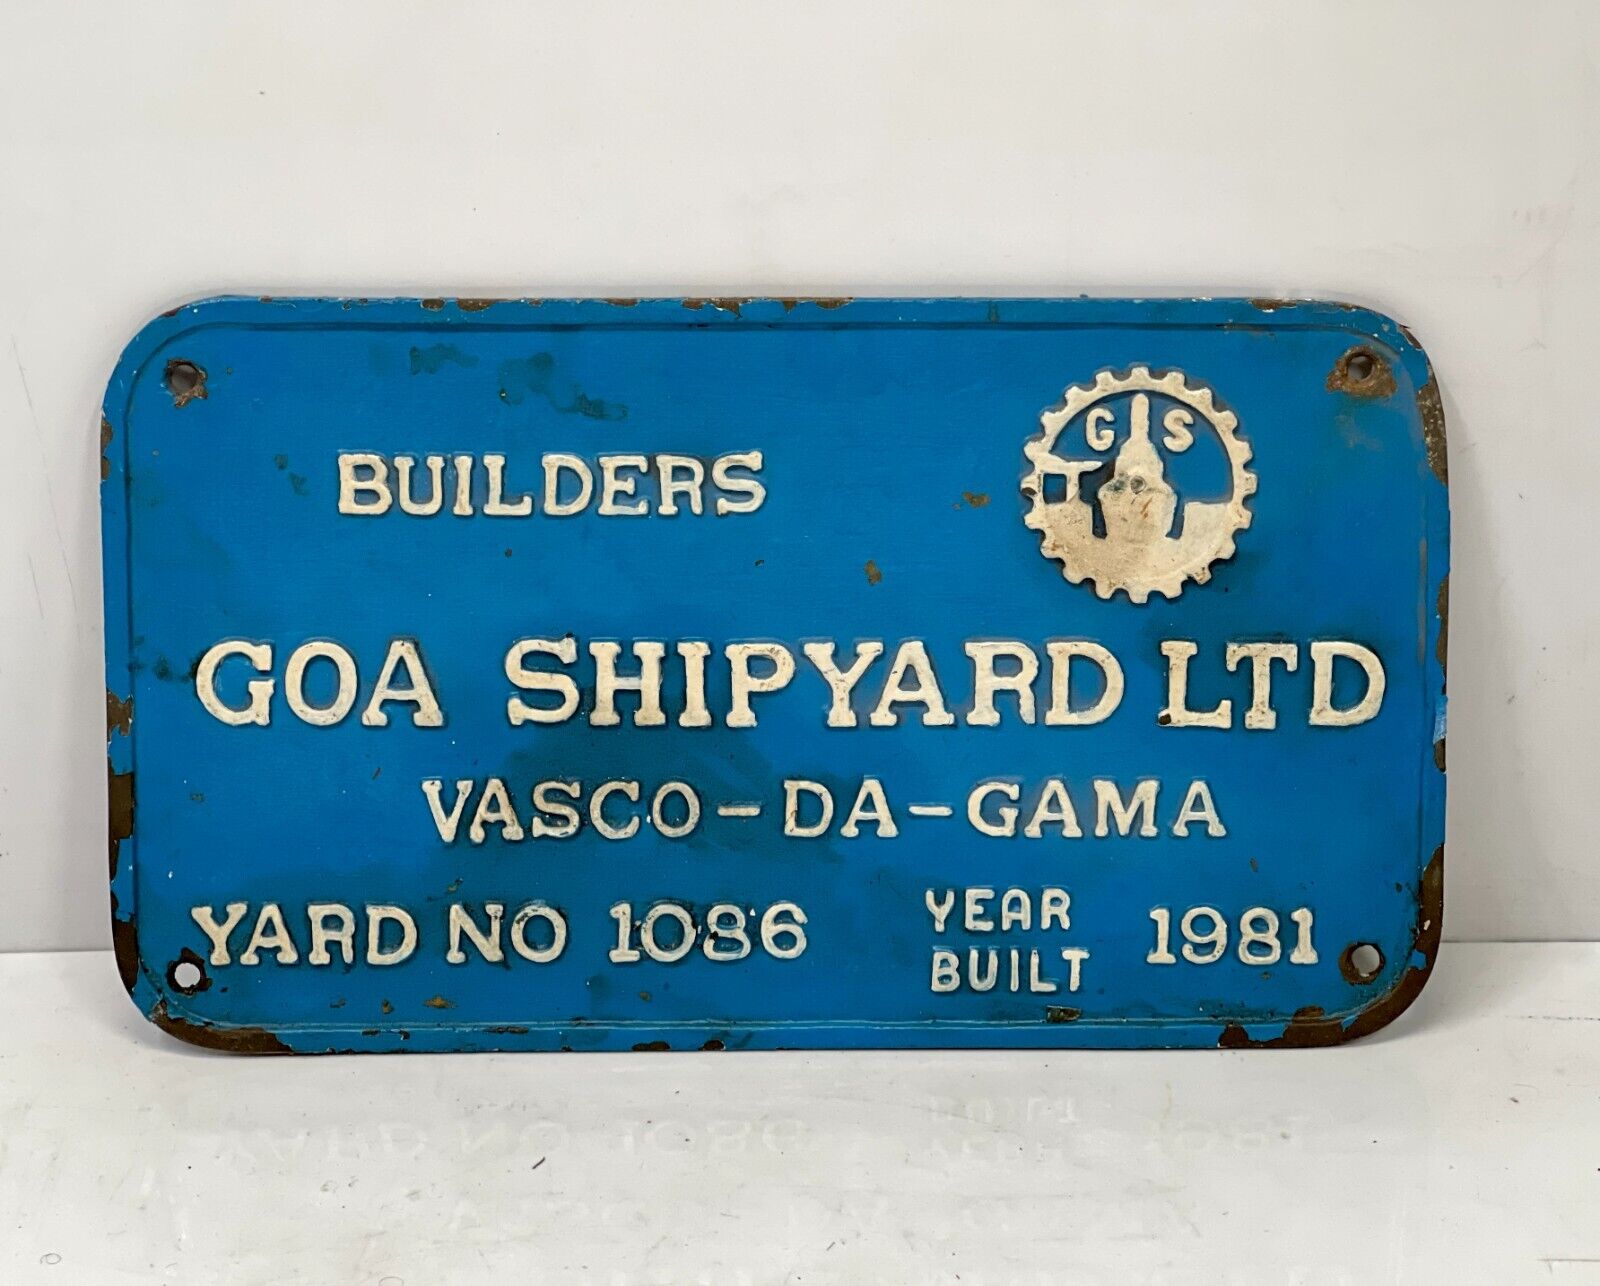 Original 1981 VASCO-DA-GAMA Yard no. 1036 Goa Shipyard Vintage Old Brass Plaque